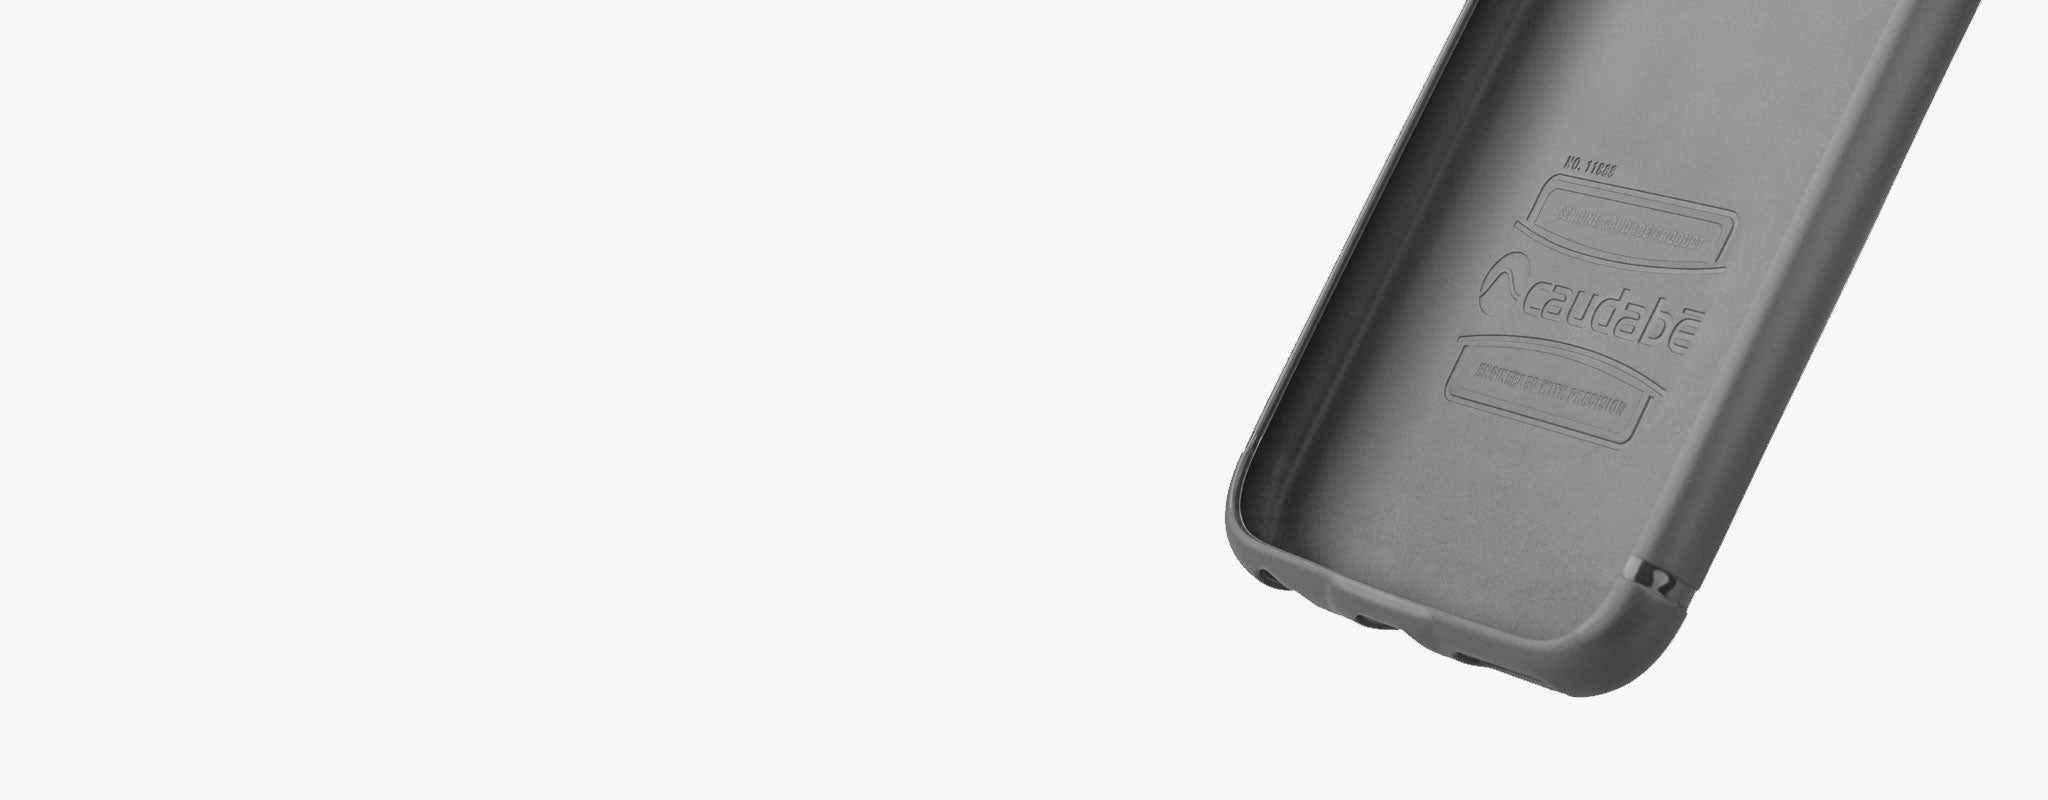 The Sheath | Super slim, shock-absorbing, minimalist iPhone case | inside